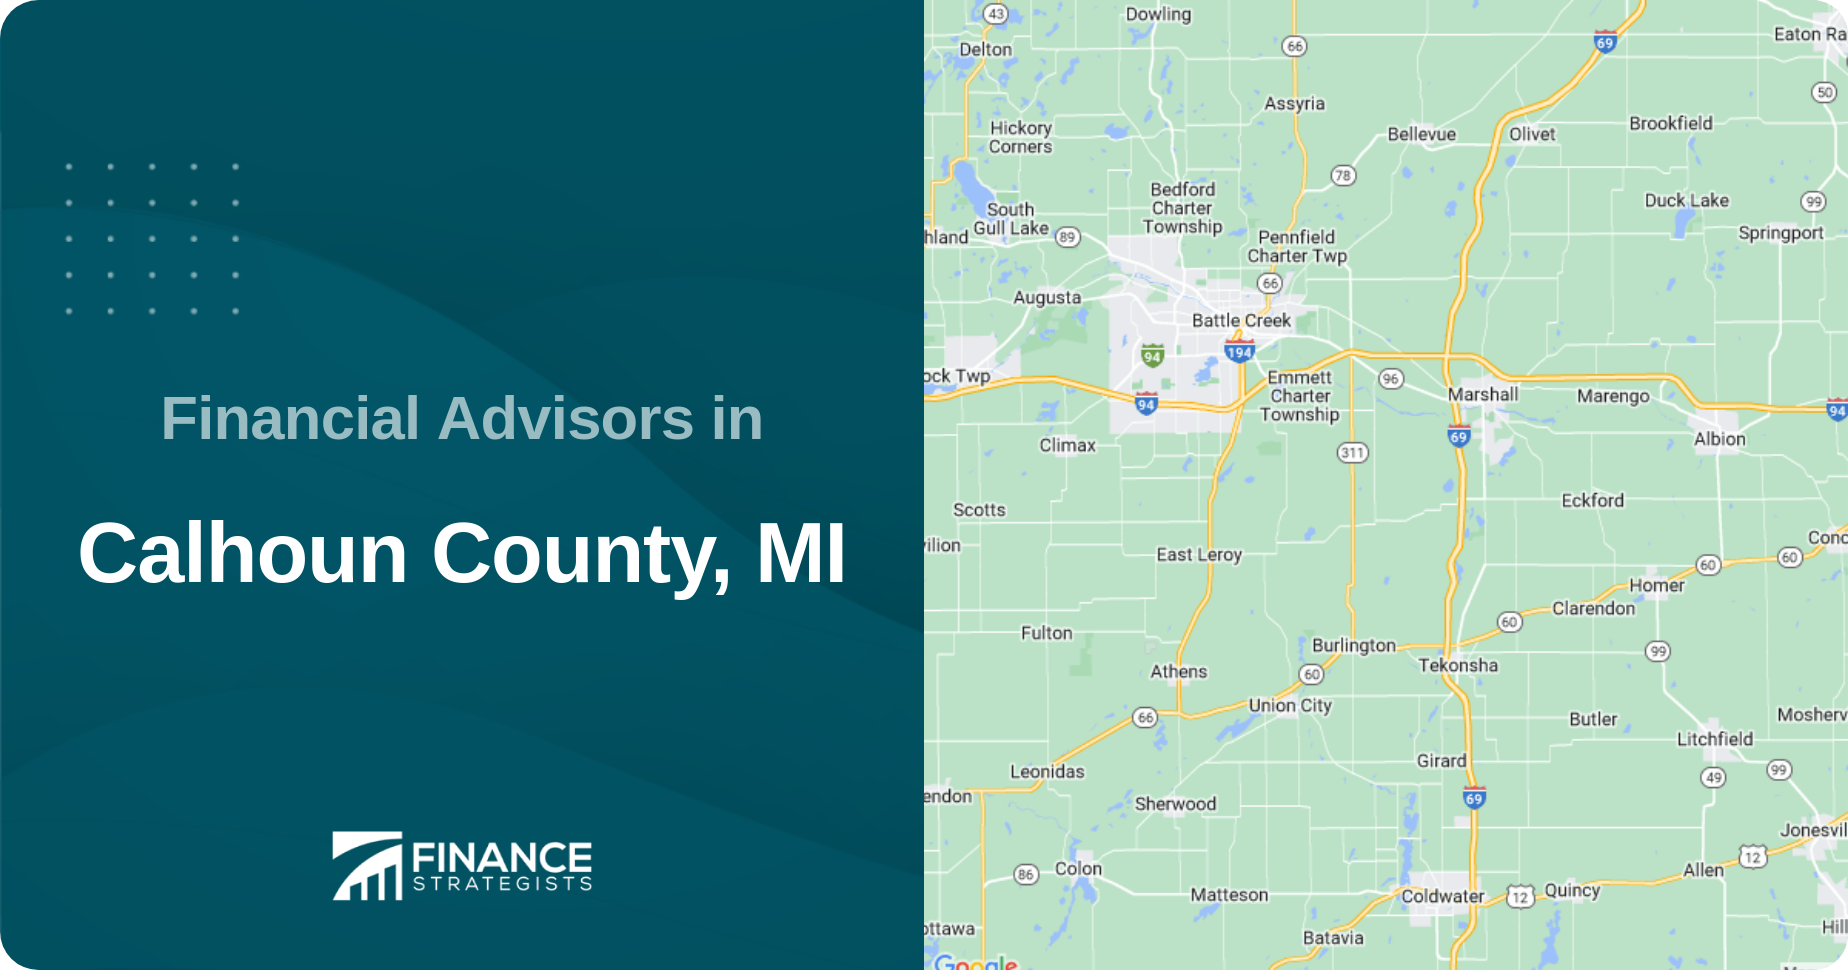 Financial Advisors in Calhoun County, MI